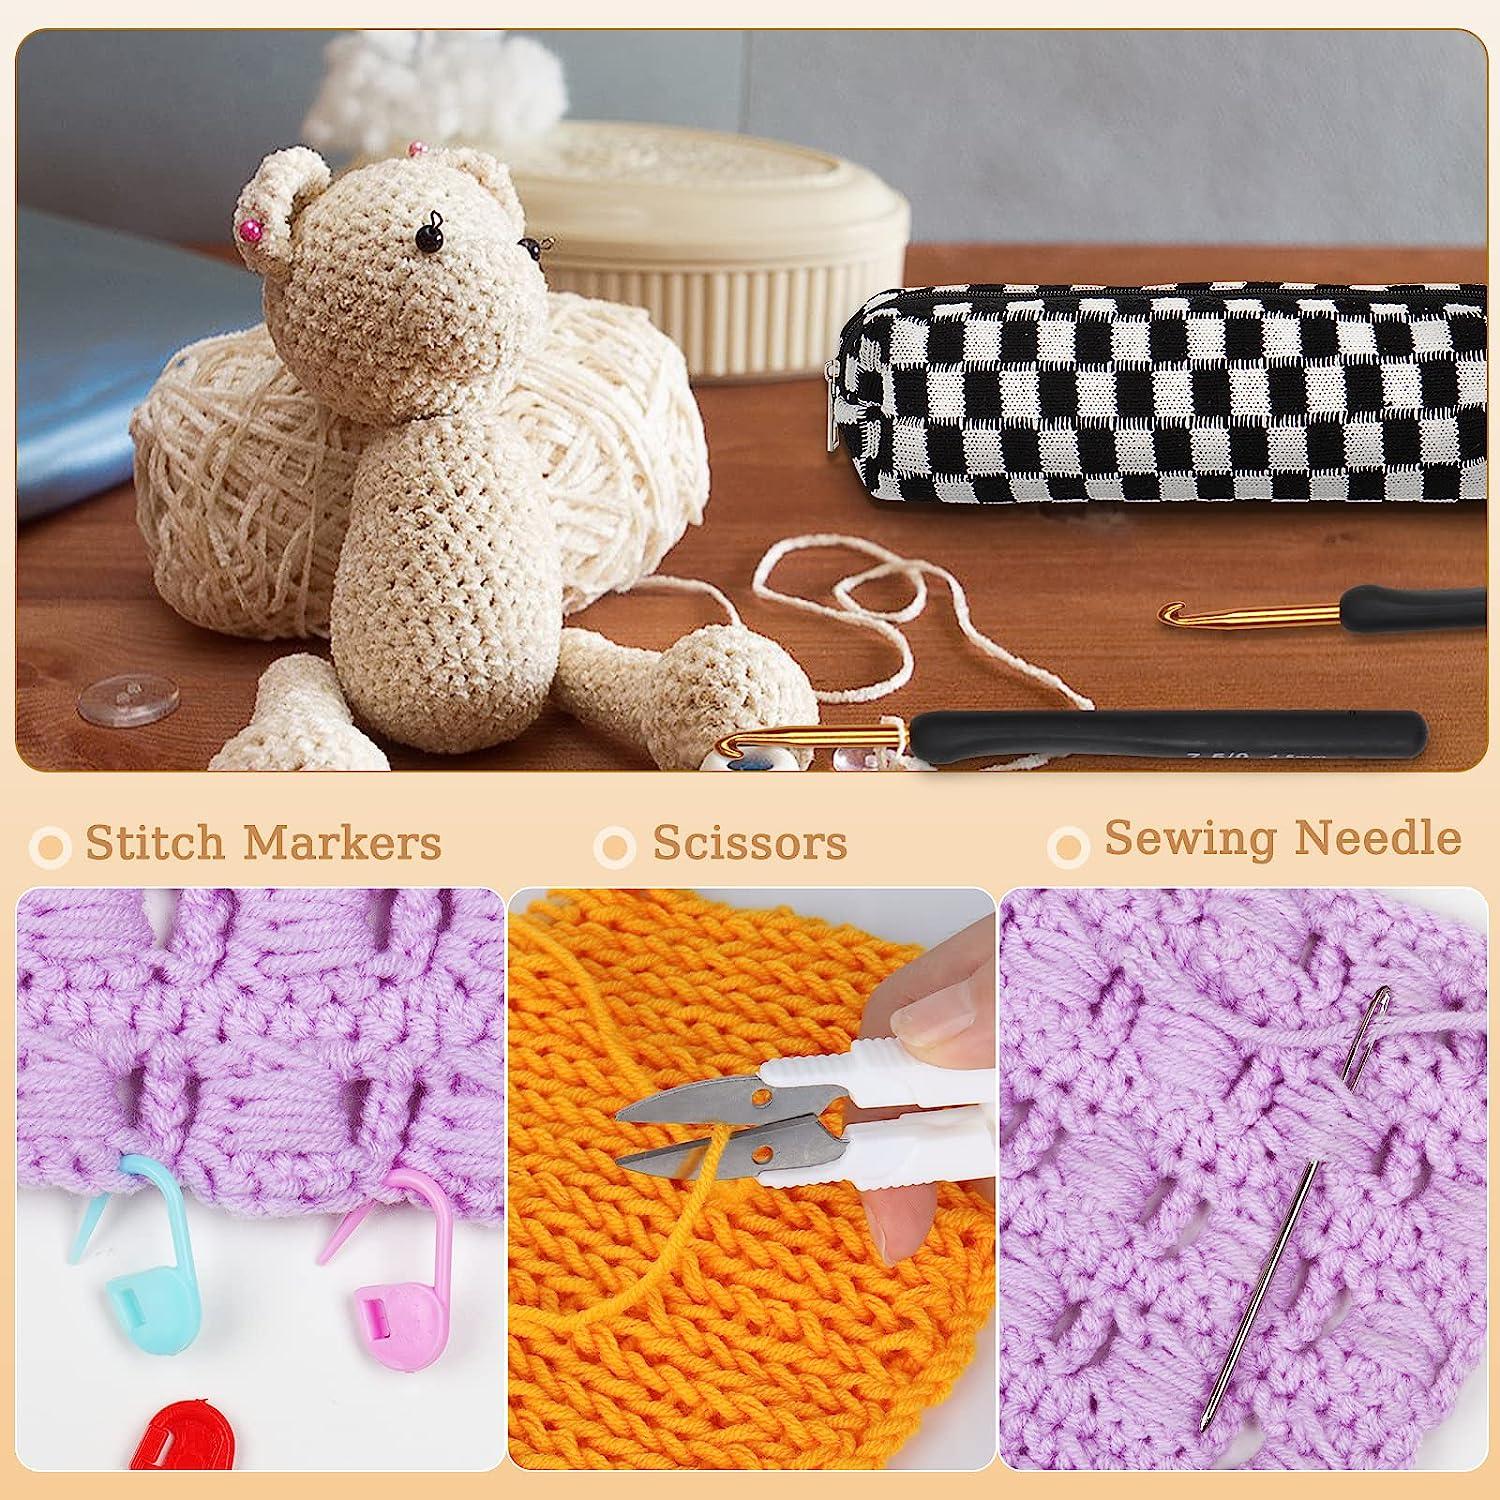  Aeelike Tunisian Crochet Kit for Beginners Adults